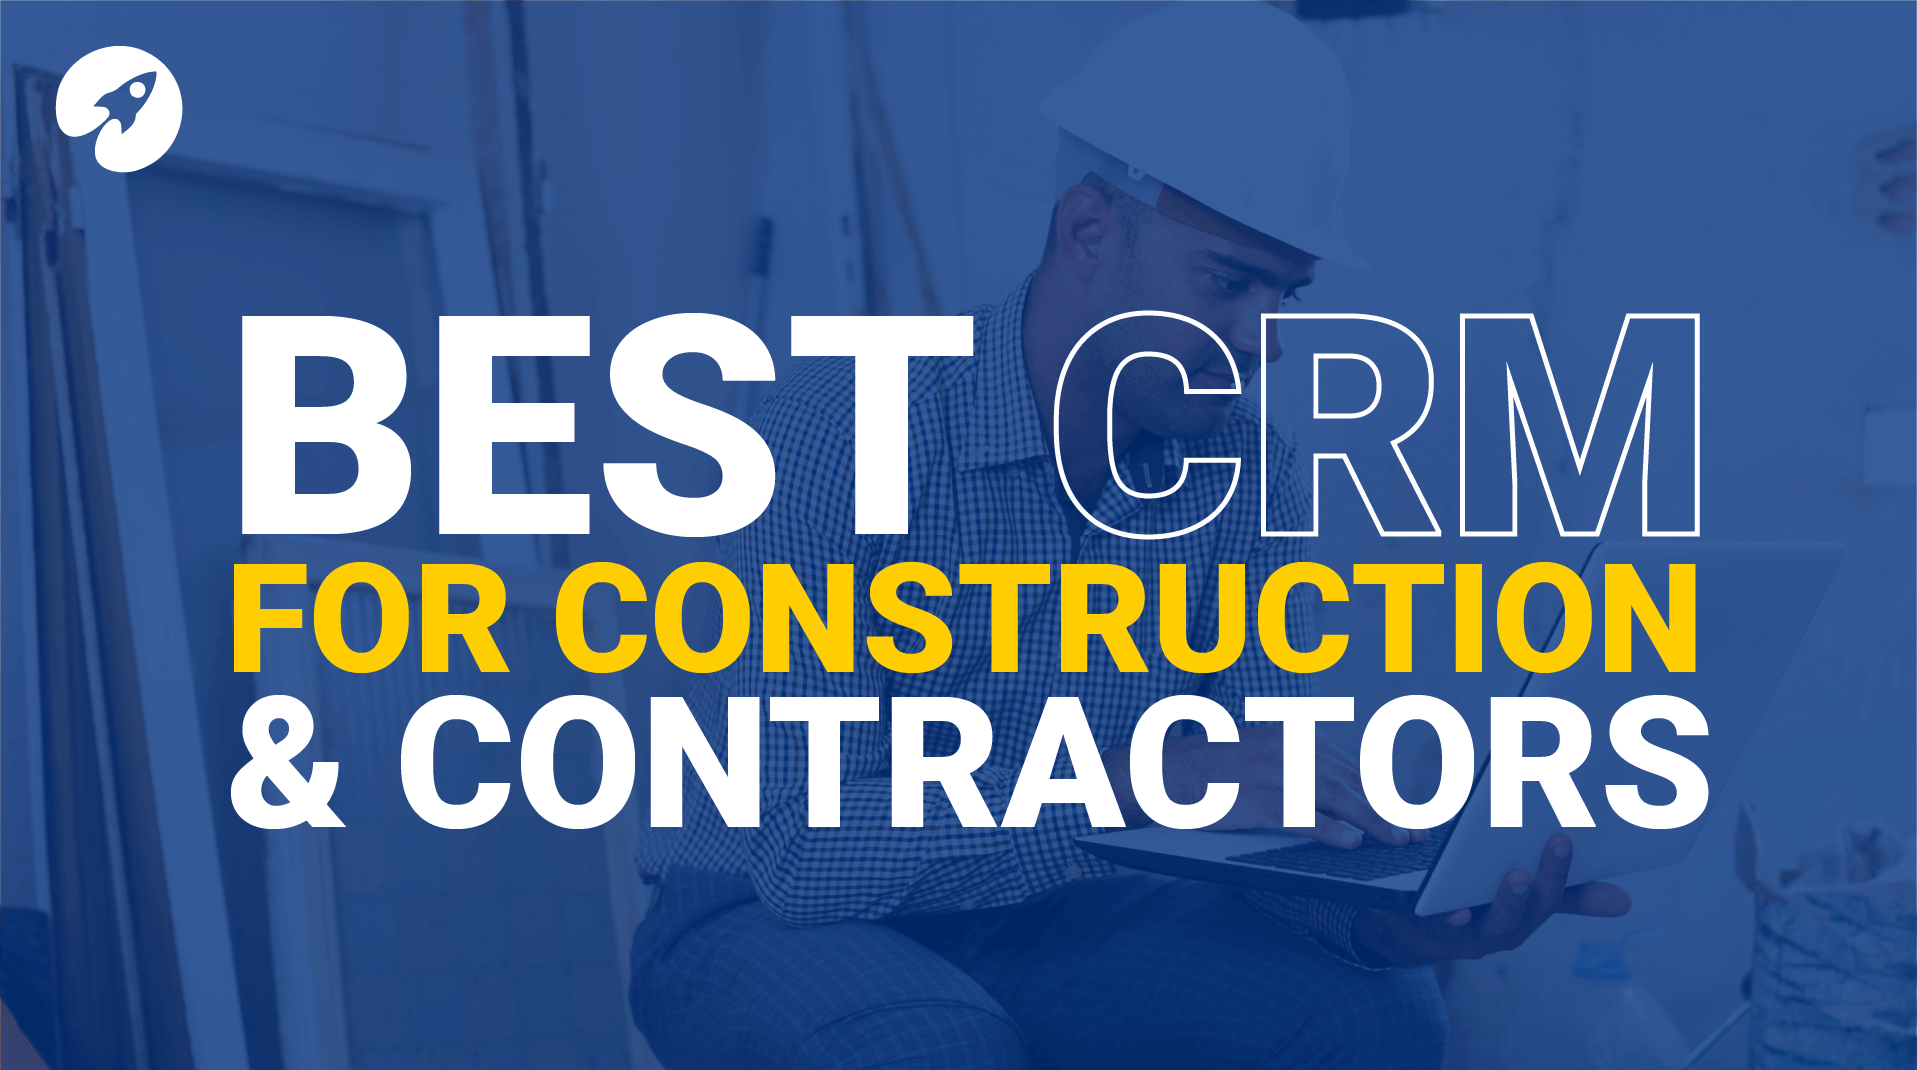 Best CRM for construction & contractors